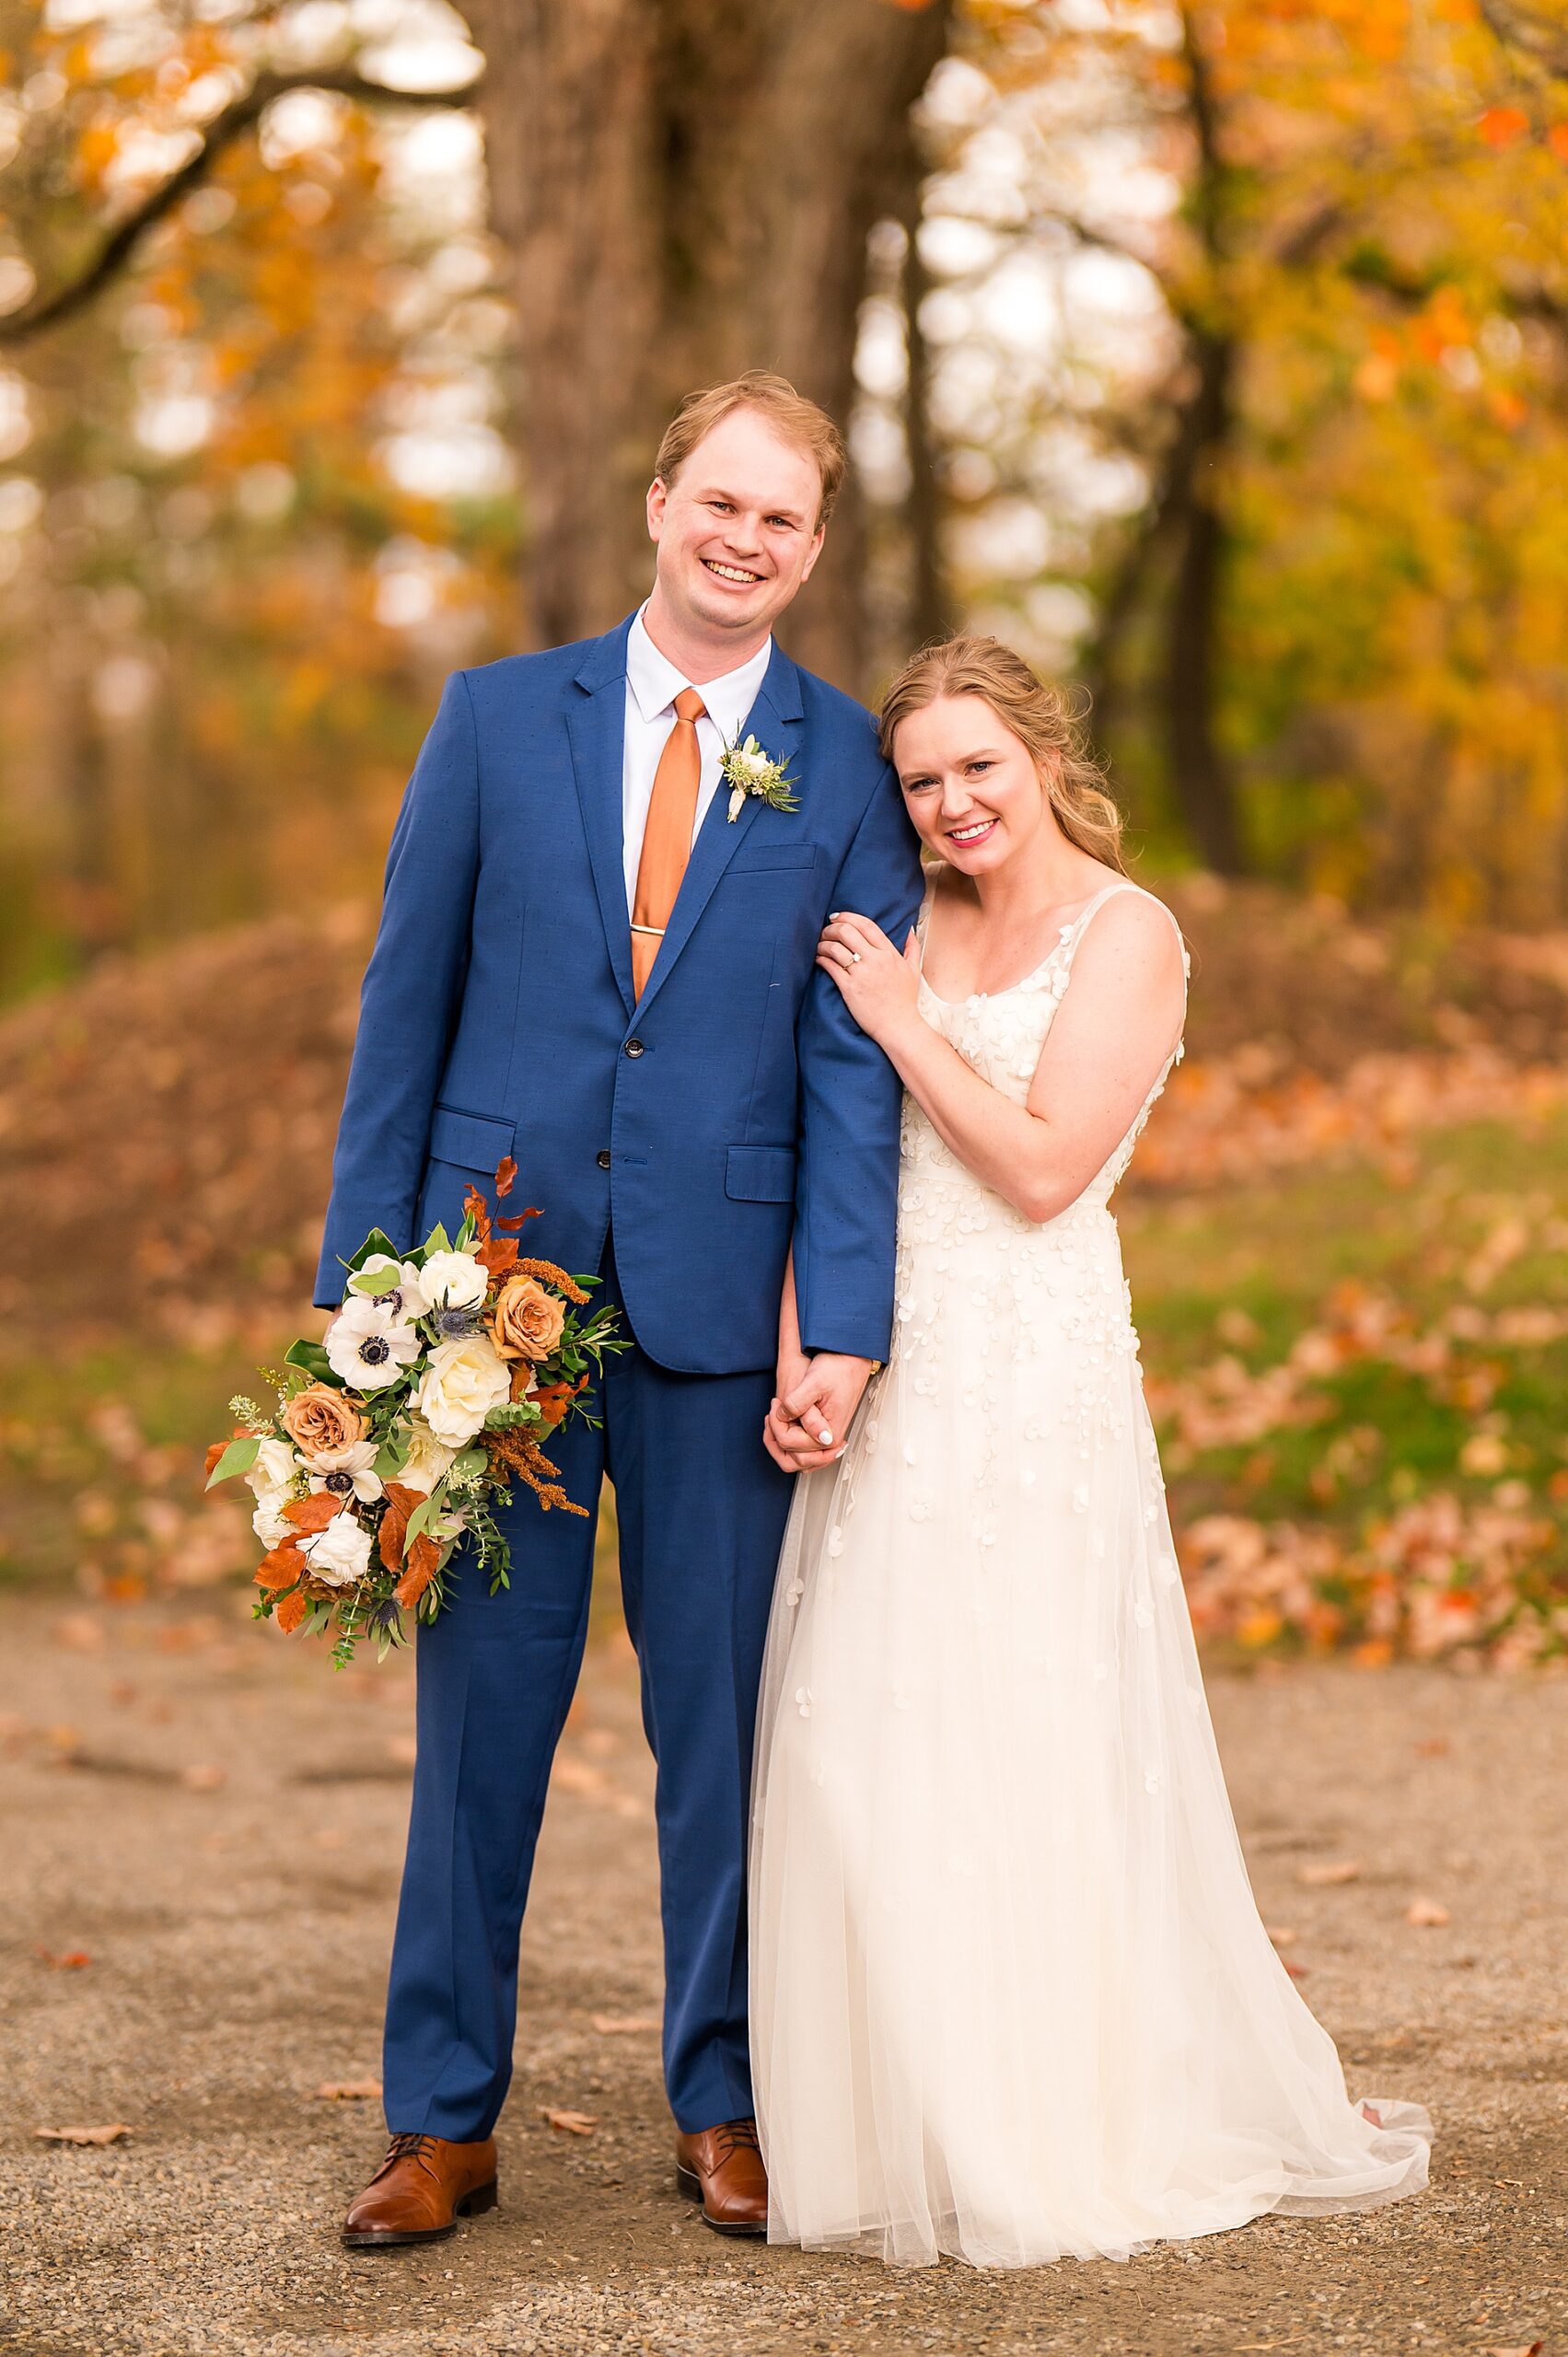 classic wedding photos by Vermont Wedding photographer Allison Clarke Photography